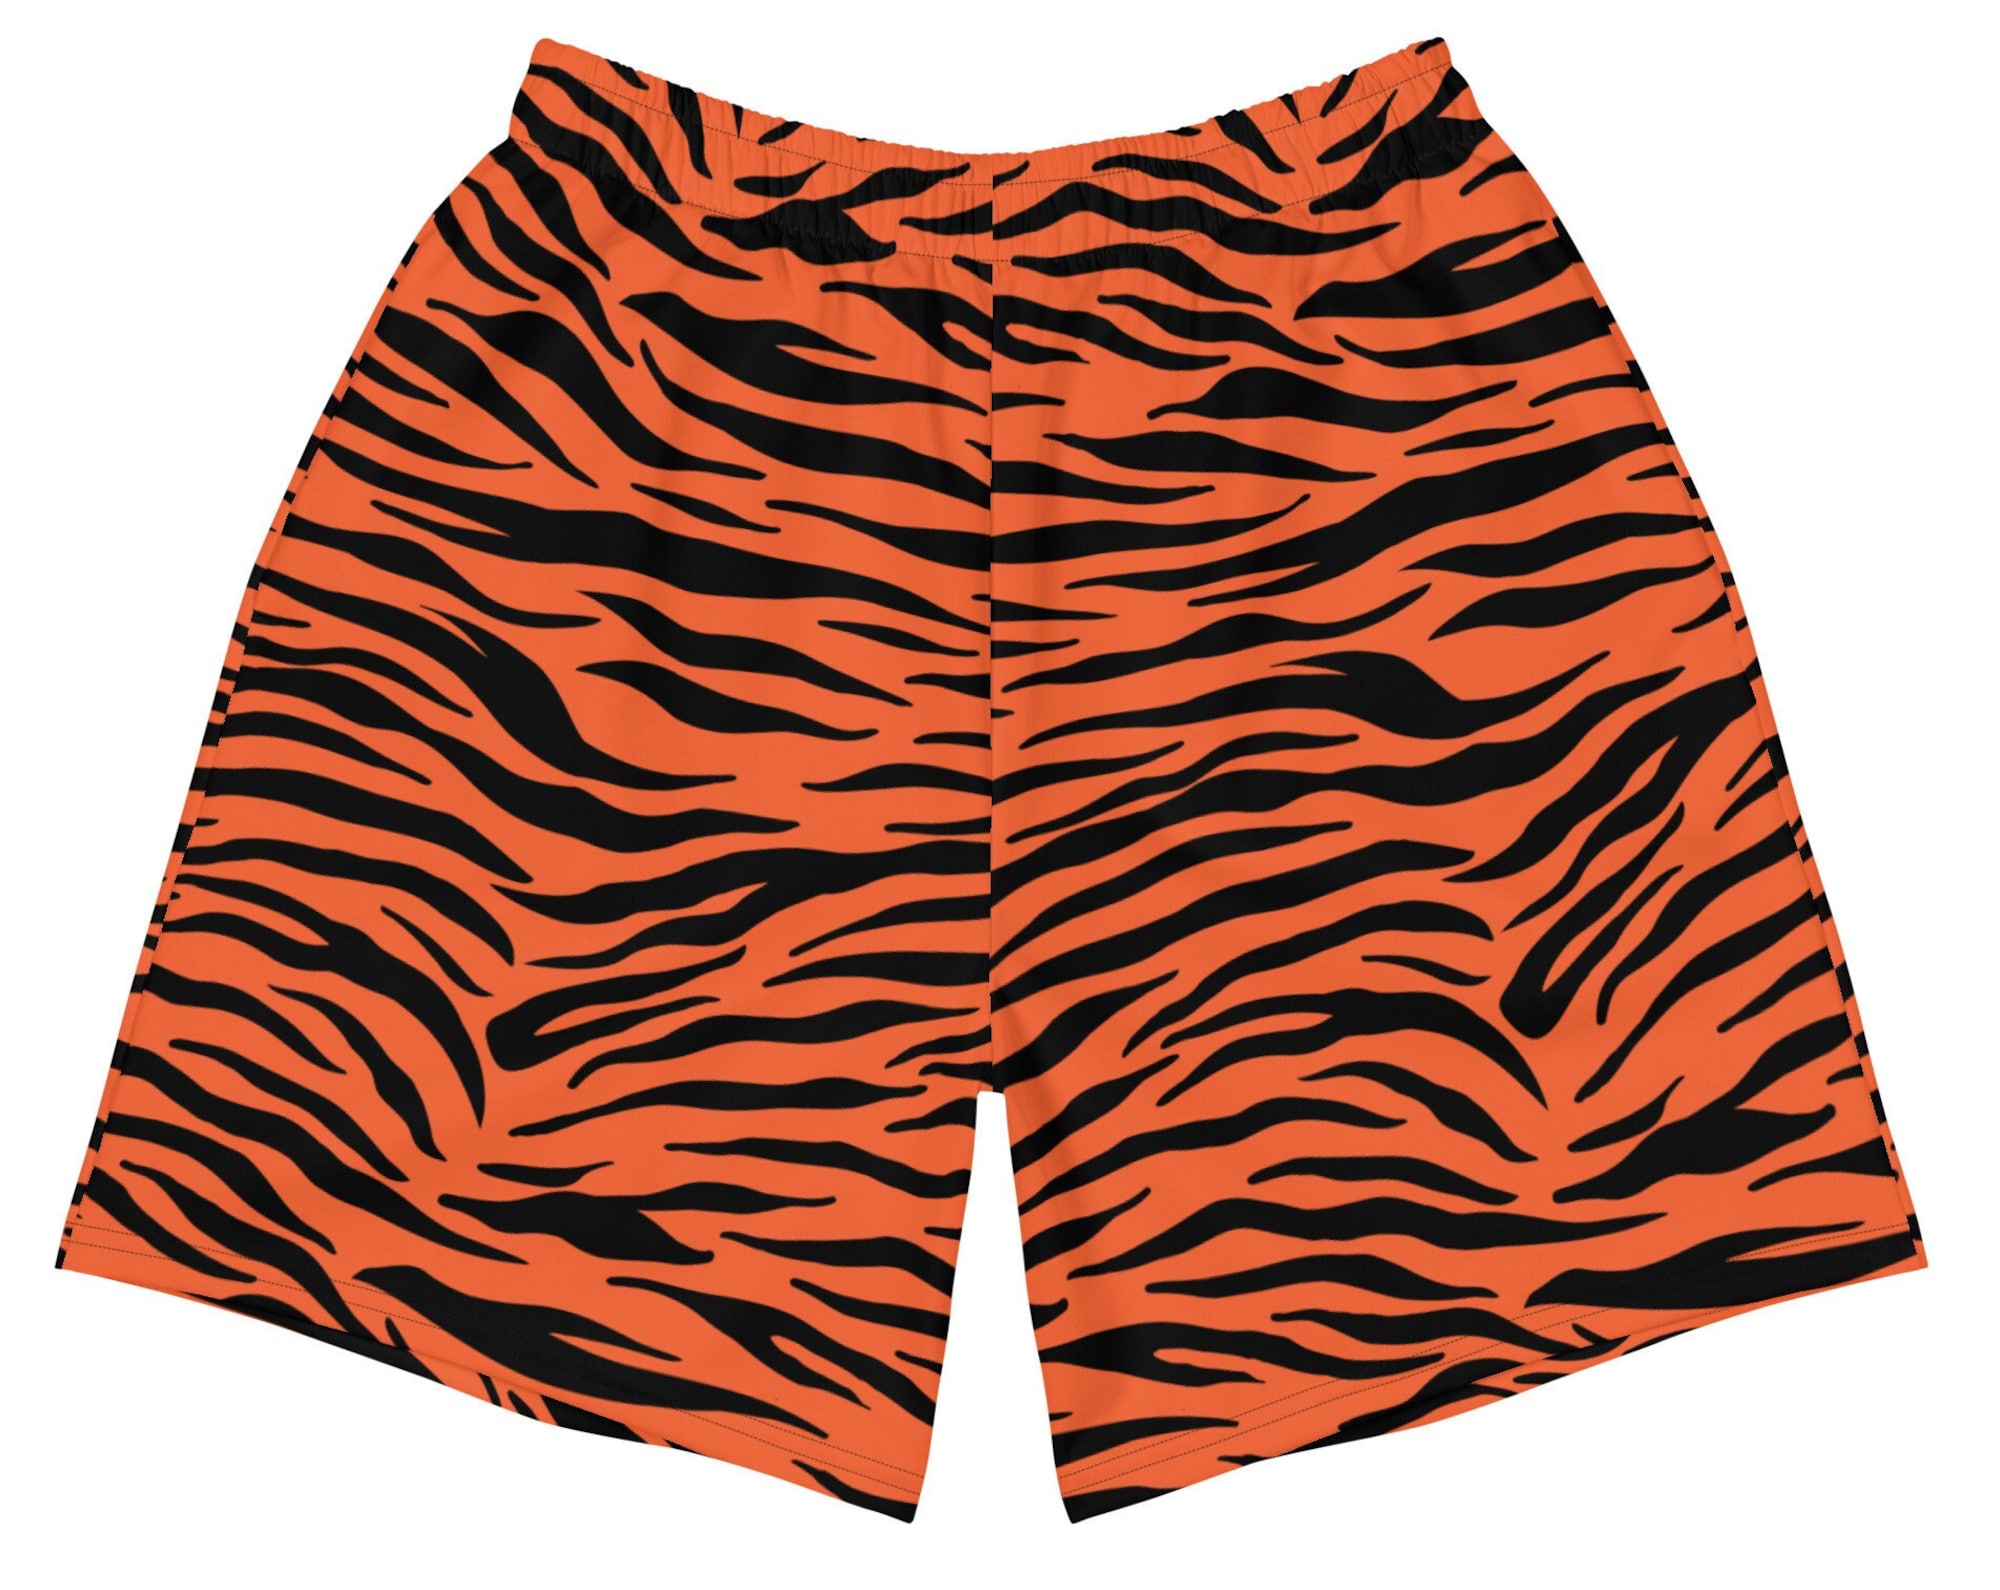 Men's Tiger Striped Shorts